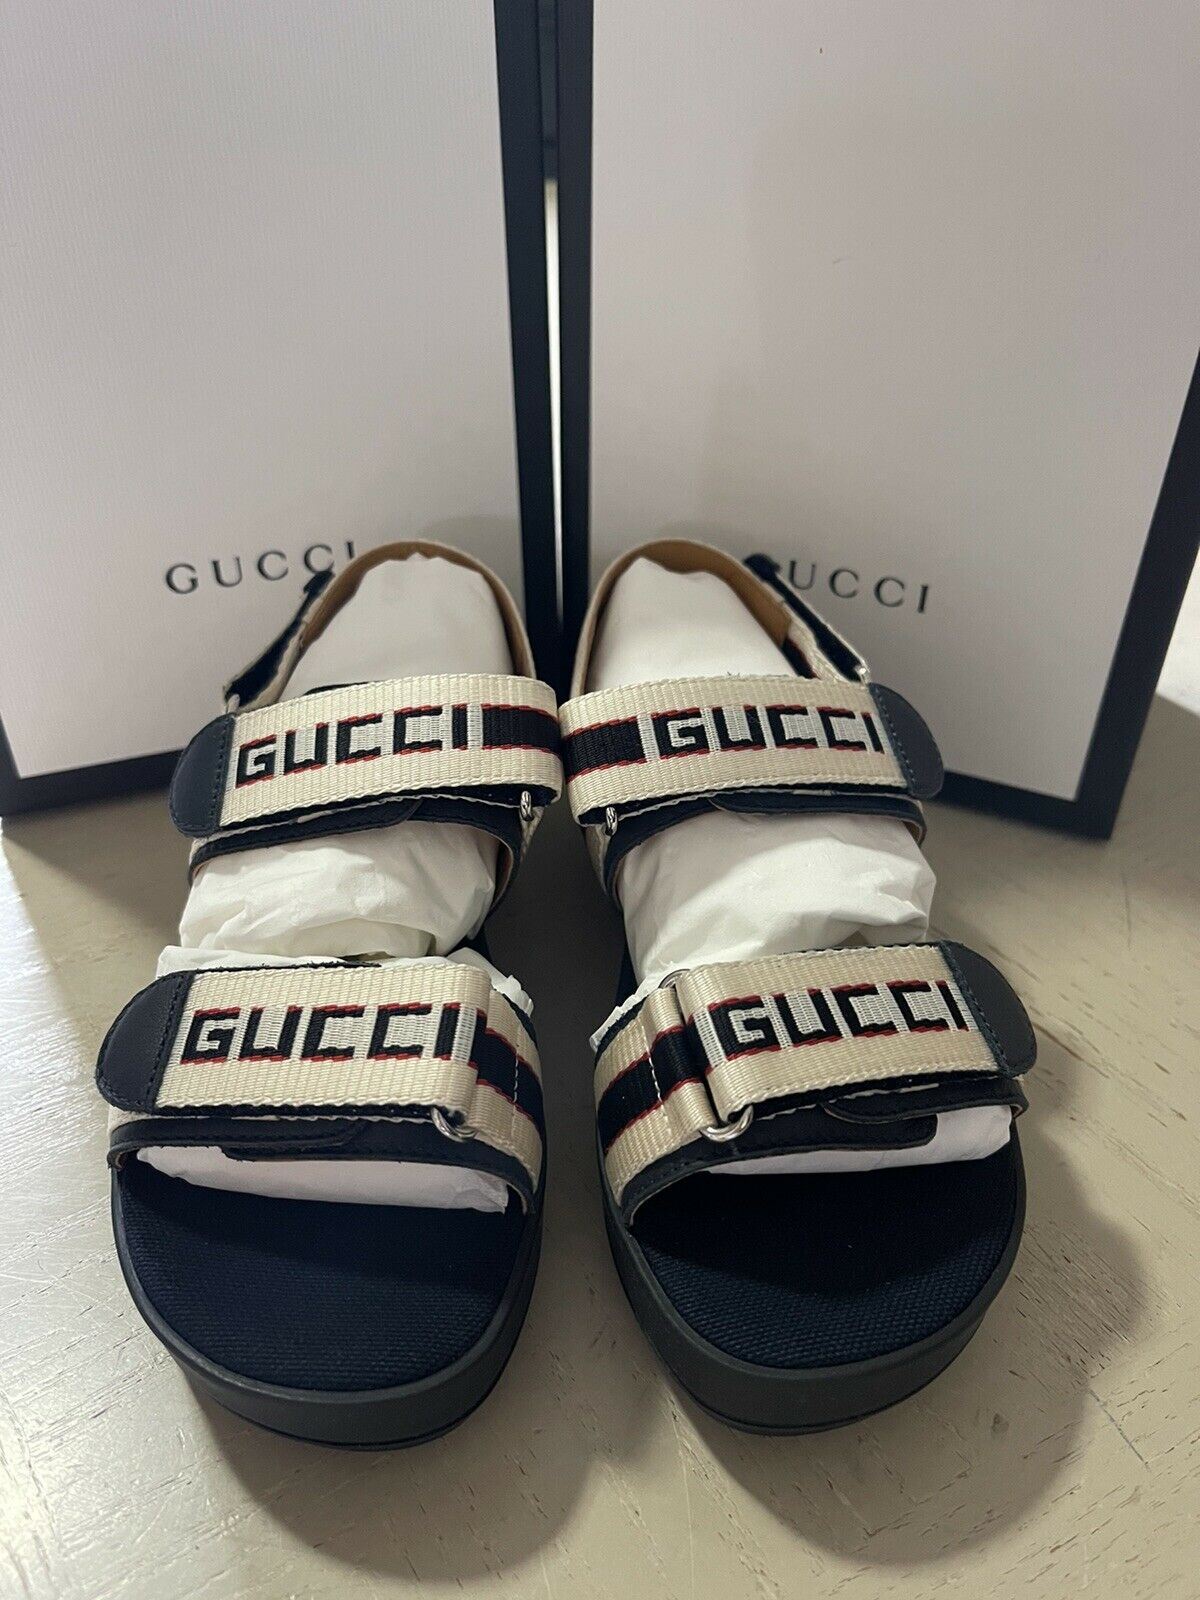 NIB Gucci Kids Canvas/Leather Sandal Shoes Black/White Size 31/13US Age 6.5